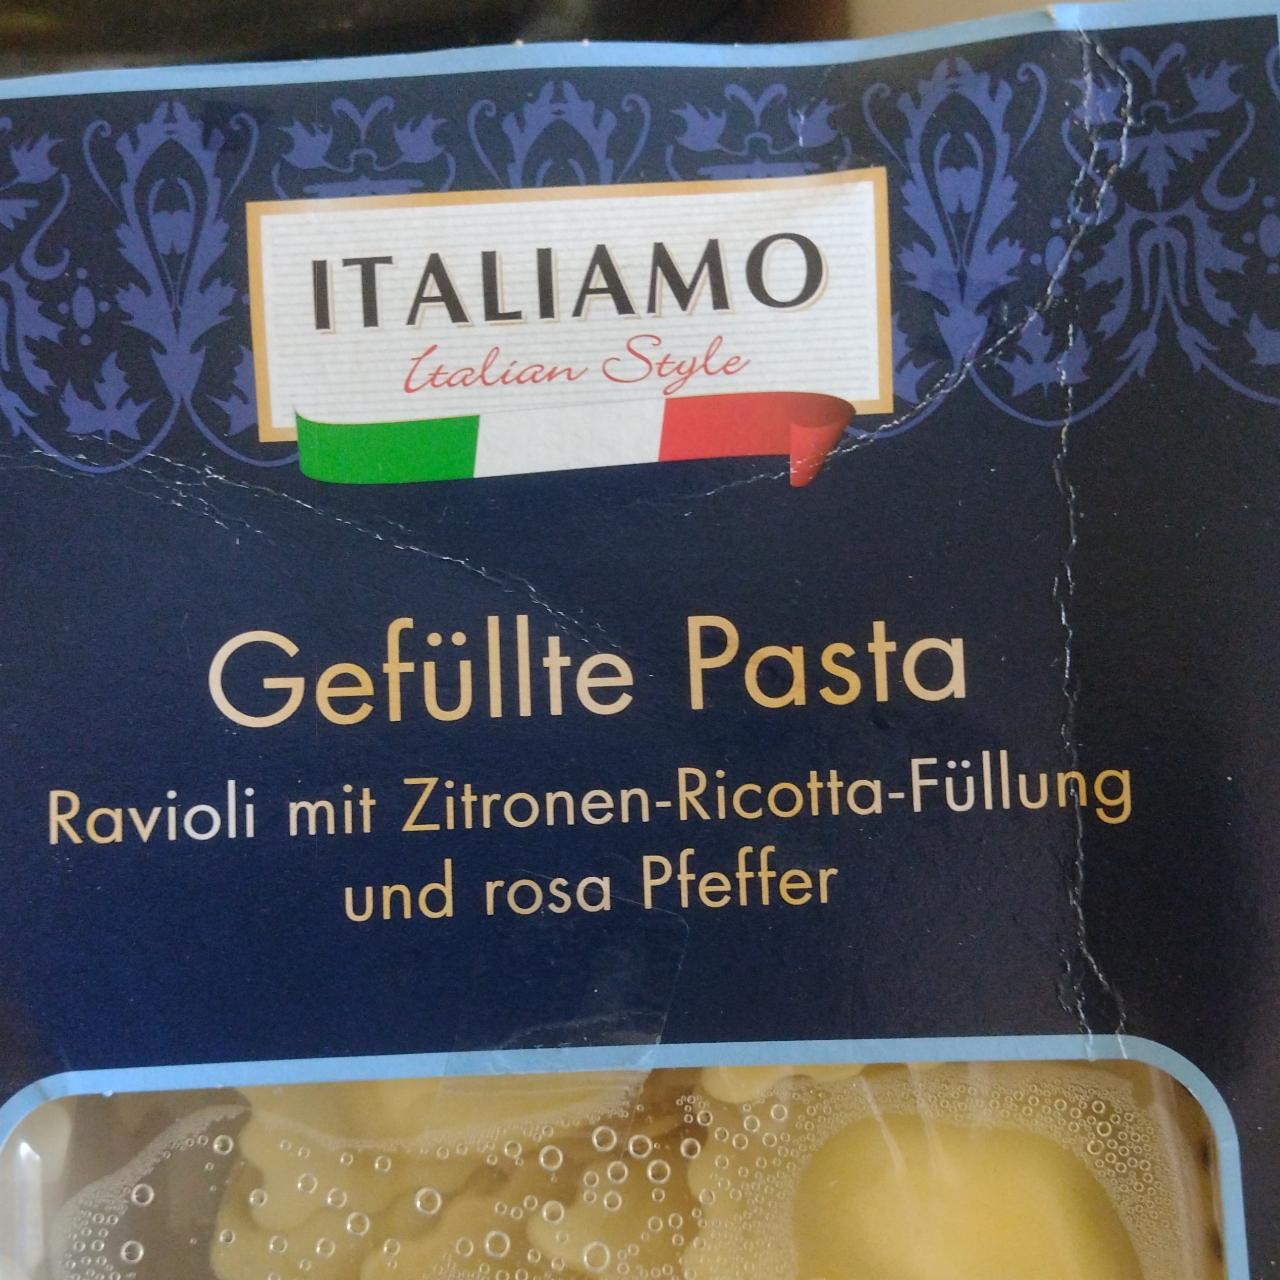 Gefüllte Pasta Ravioli mit Zitronen-Ricotta-Füllung und rosa Pfeffer  Italiamo - kalorie, kJ a nutriční hodnoty